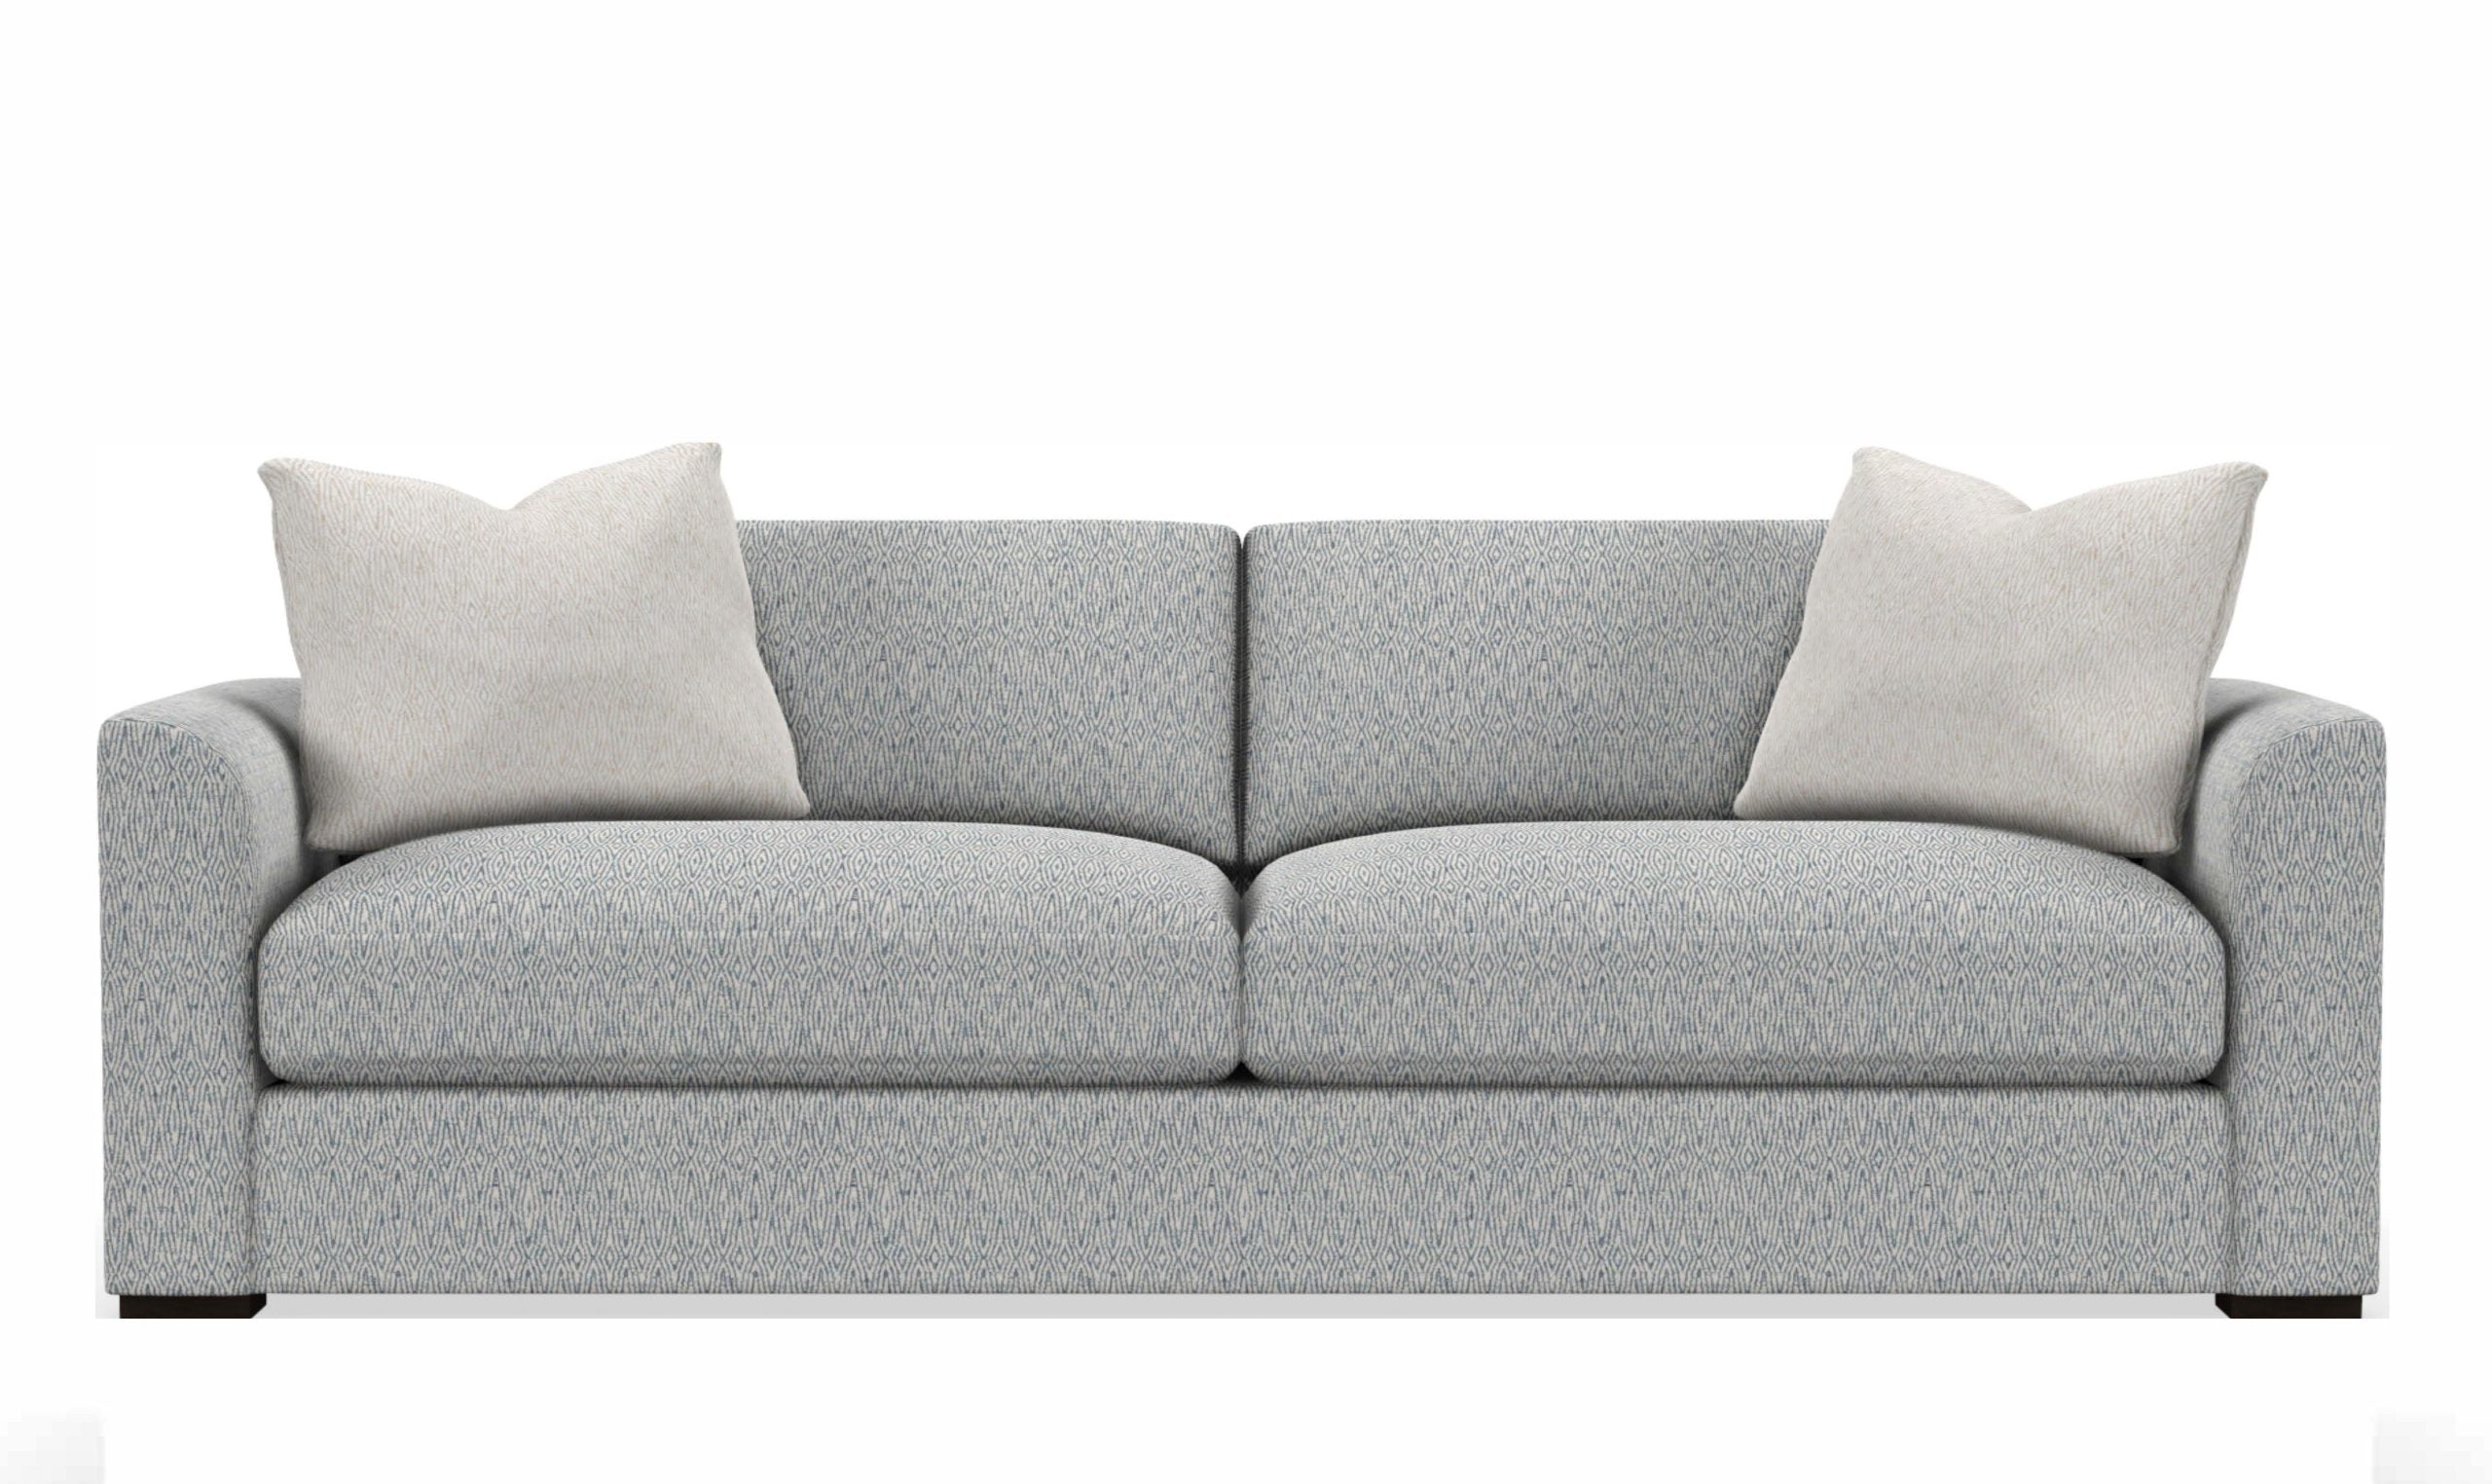 Derby two cushion sofa 94" - Hedi's Furniture